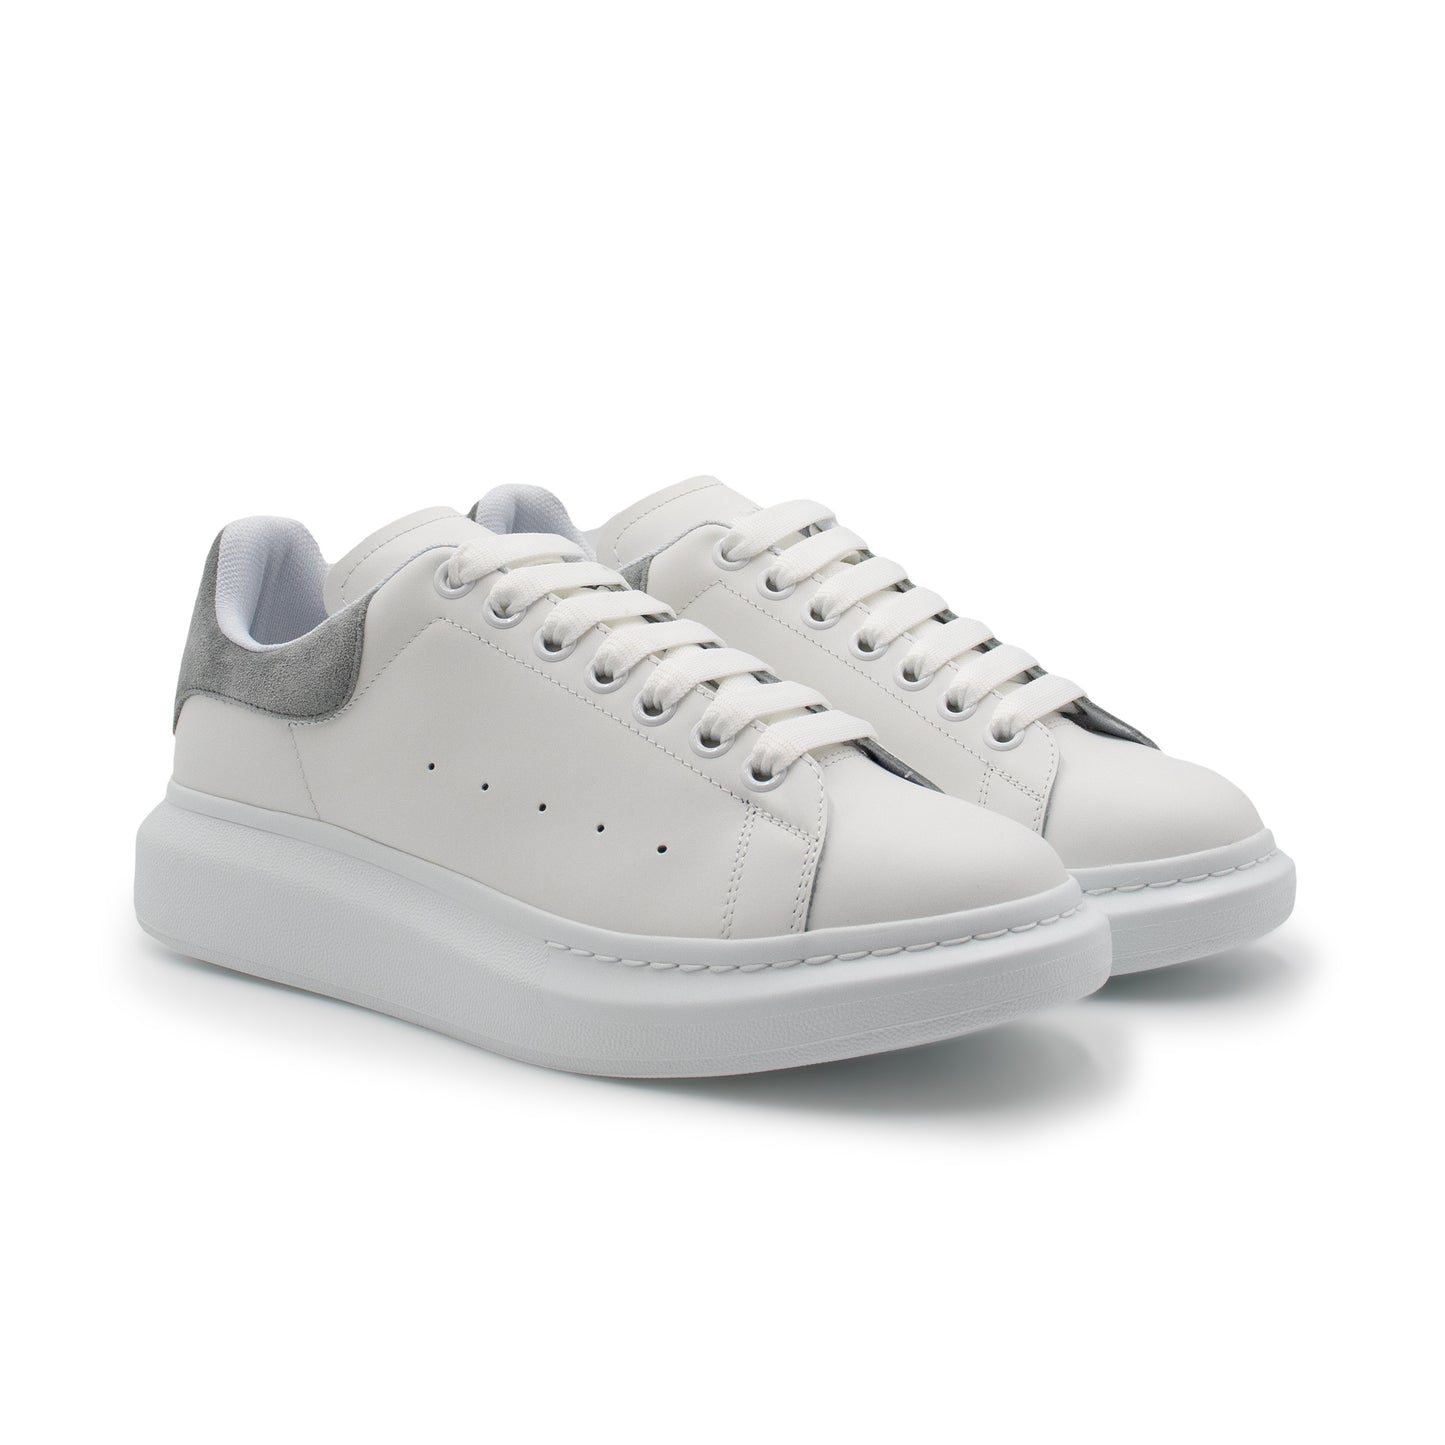 Larry Suede Heel Sneaker in White/Grey